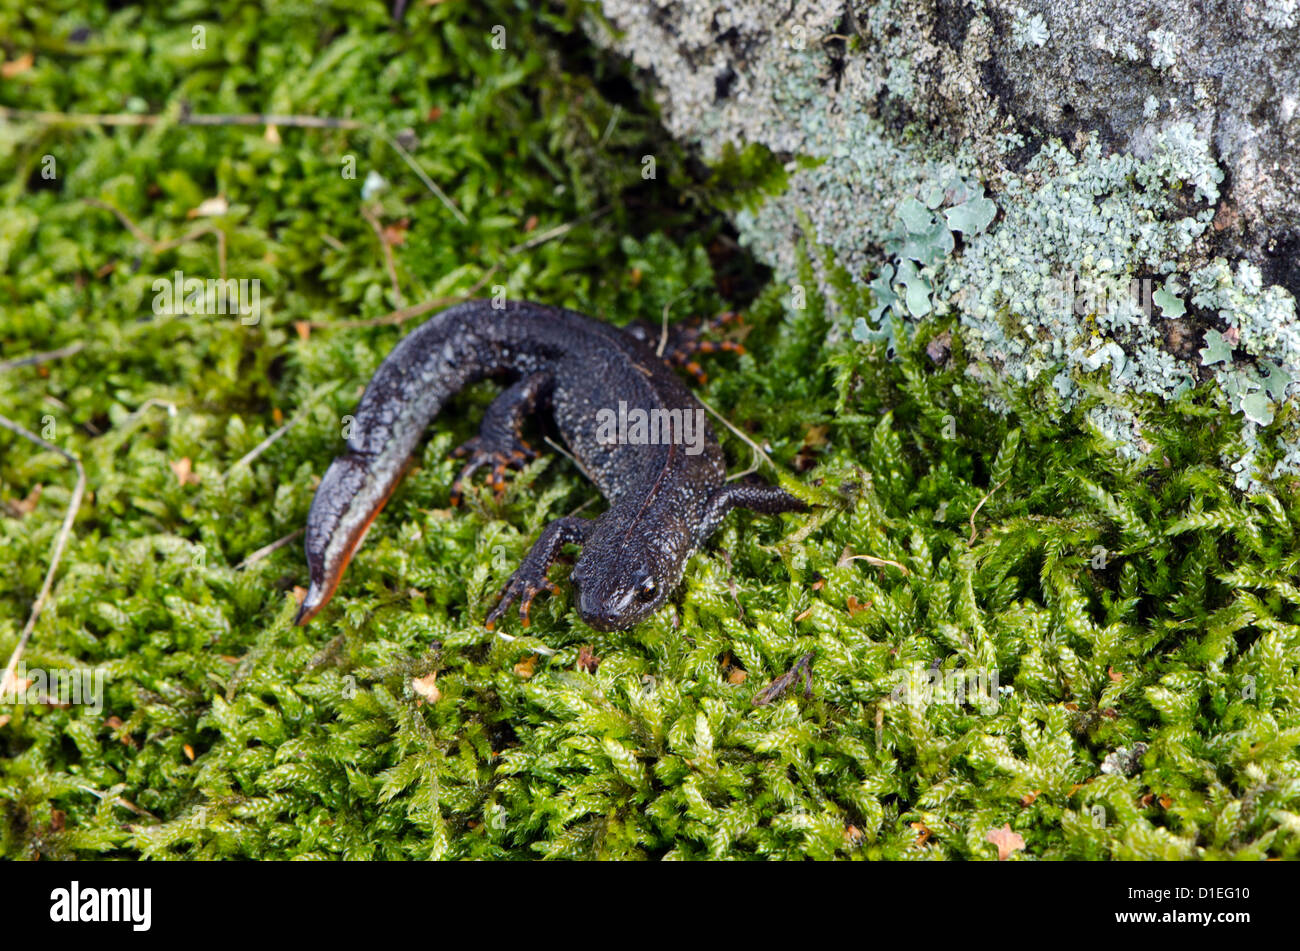 newt triton eft pleurodelinae salamandridae cold-blooded amphibian on moss Stock Photo